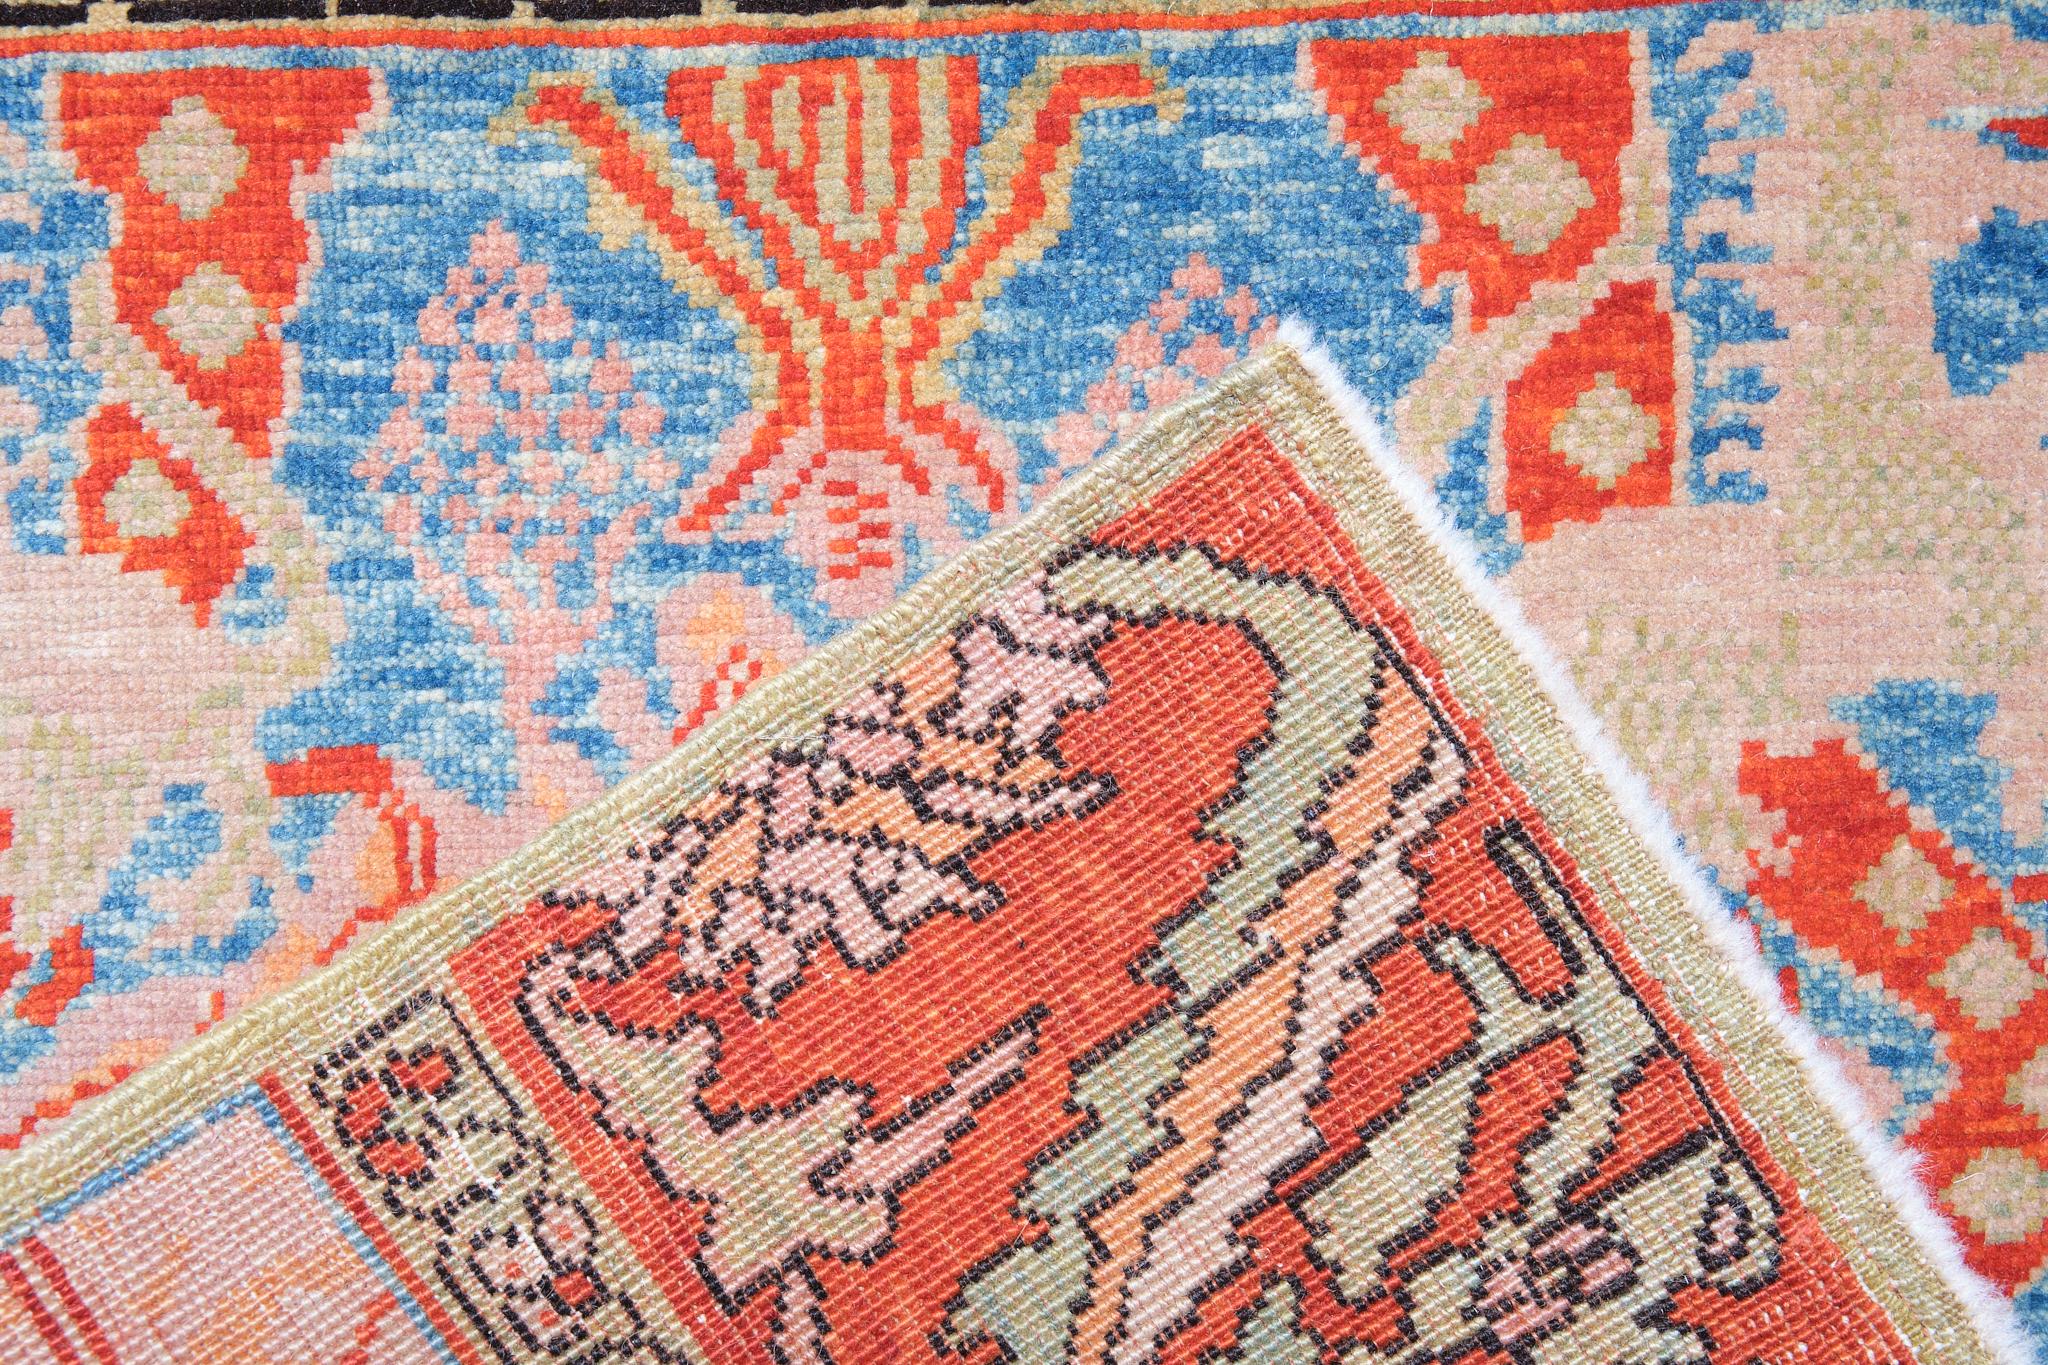 Vegetable Dyed Ararat Rugs Bidjar Rug with Lion Design Persian Revival Carpet Natural Dyed For Sale